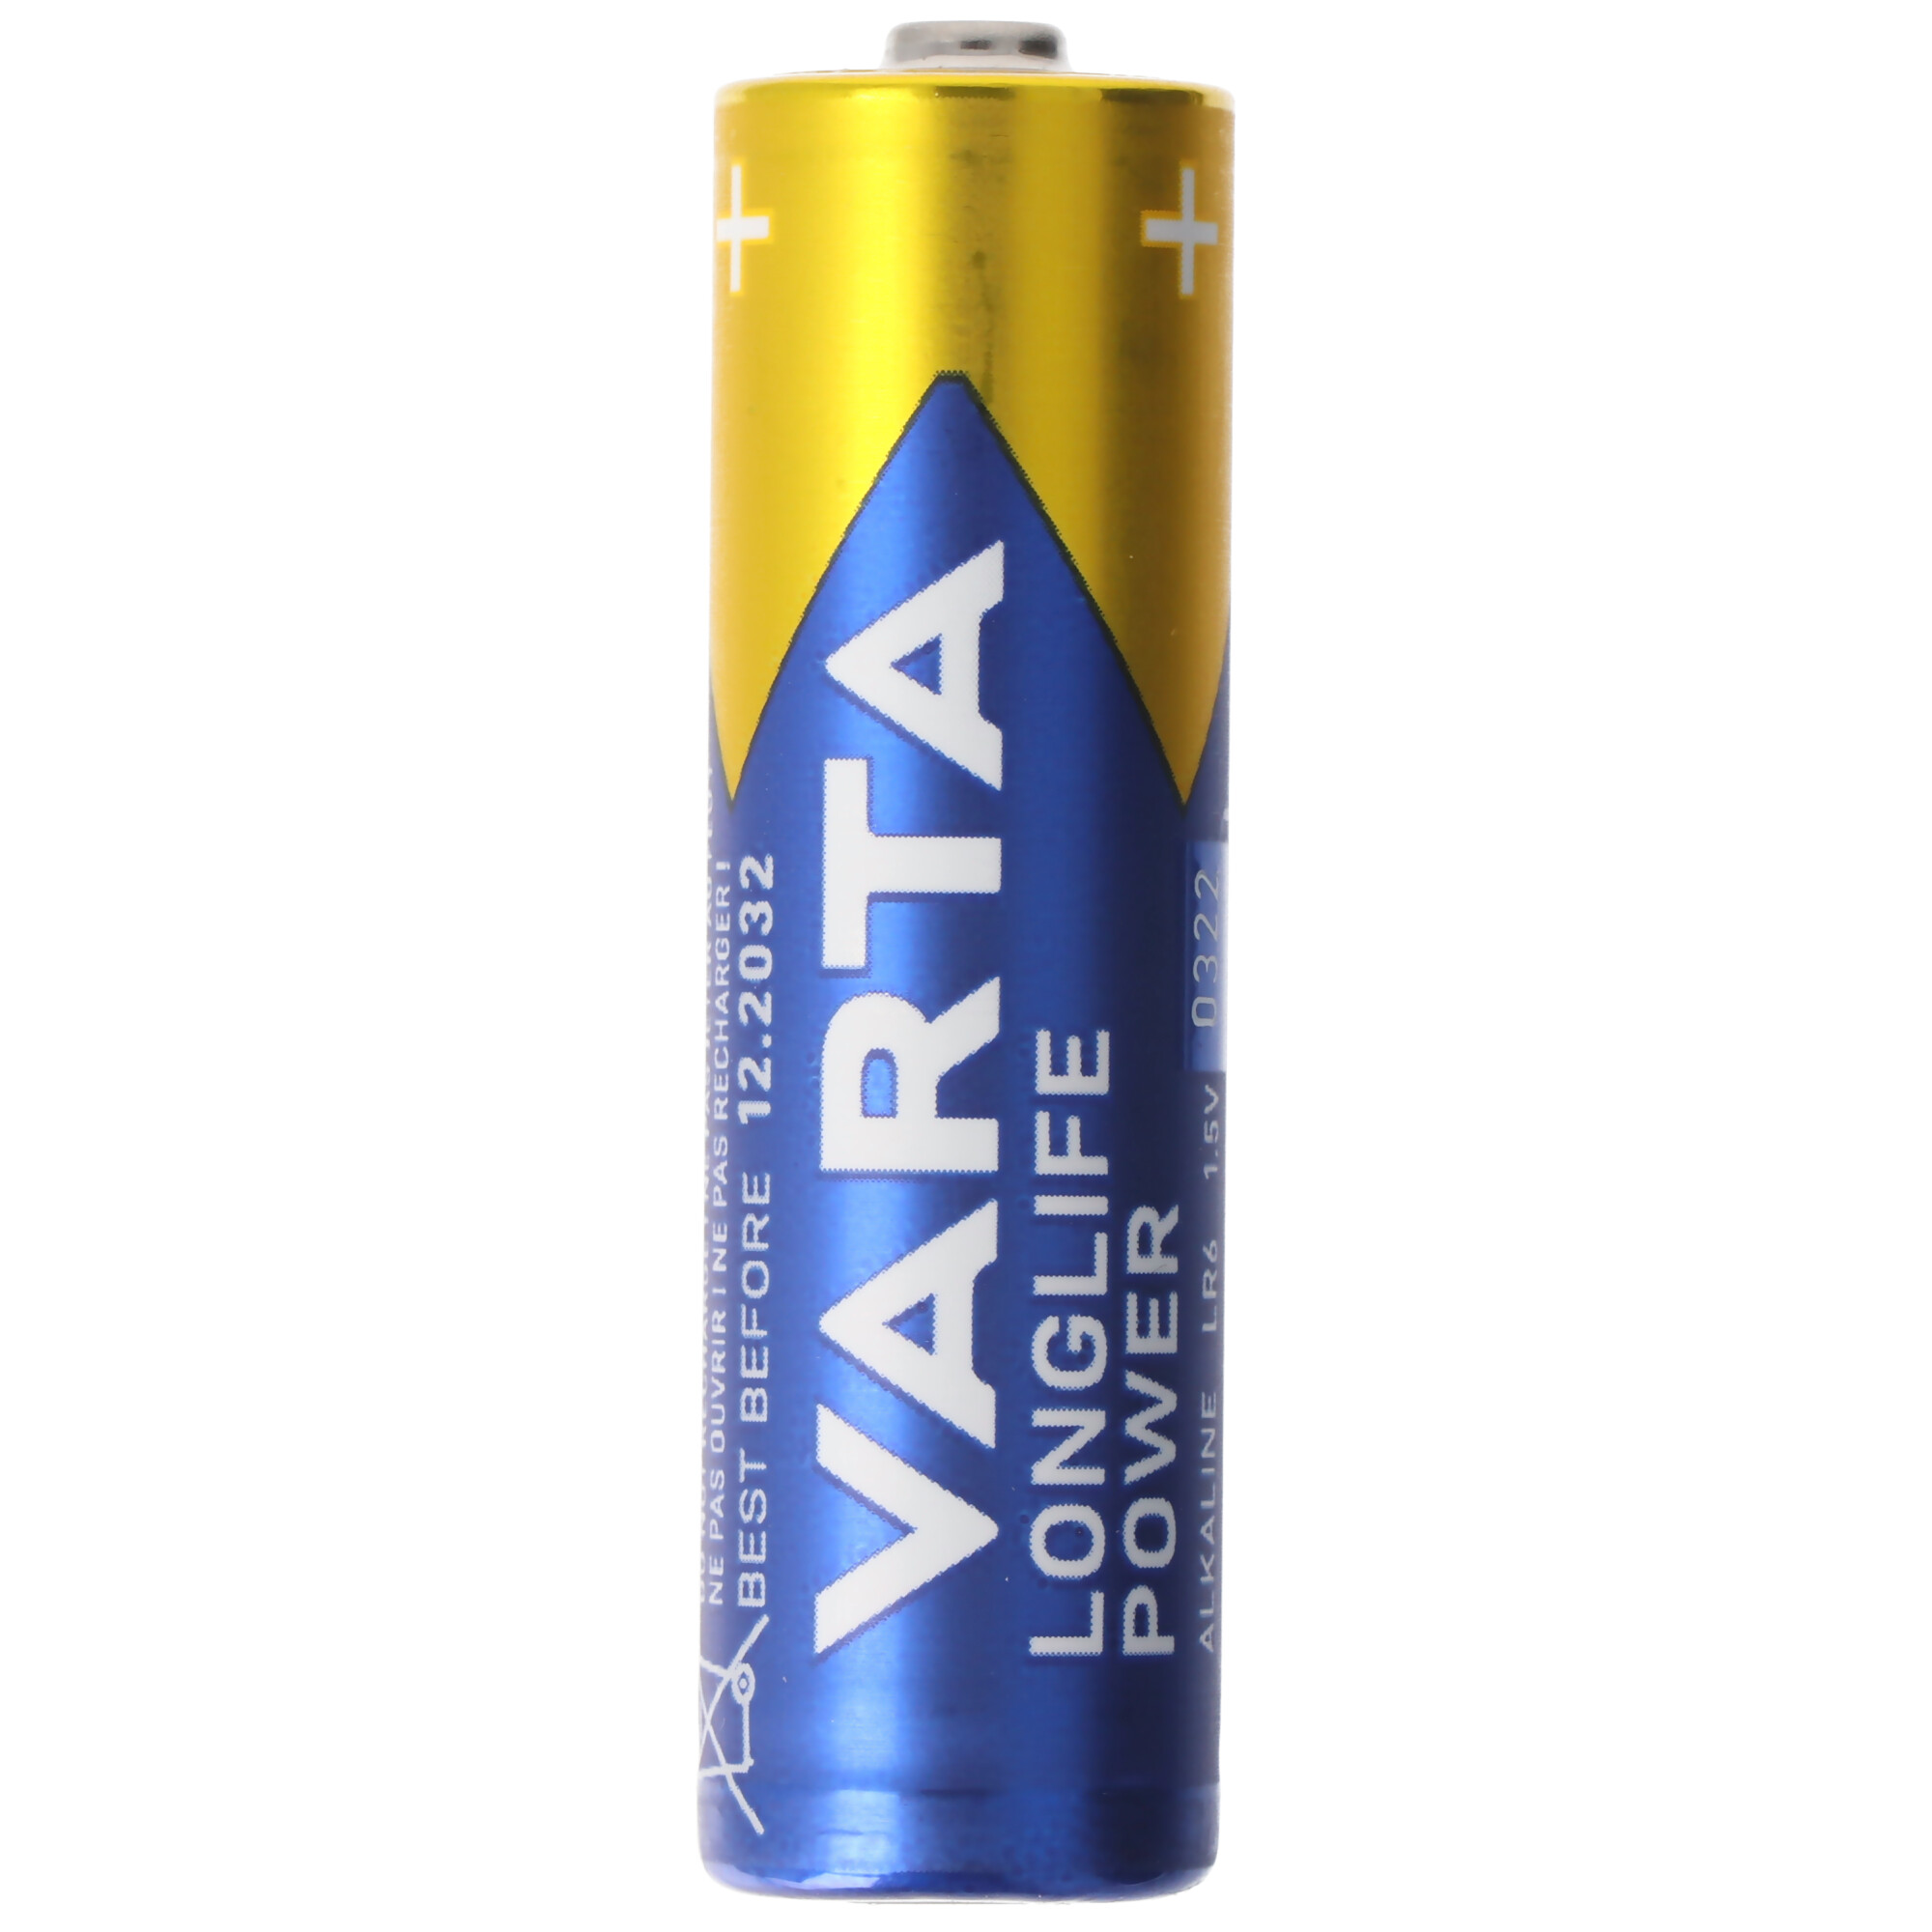 Varta Longlife Power (ehem. High Energy) Mignon AA Batterie lose Ware 1 Stück